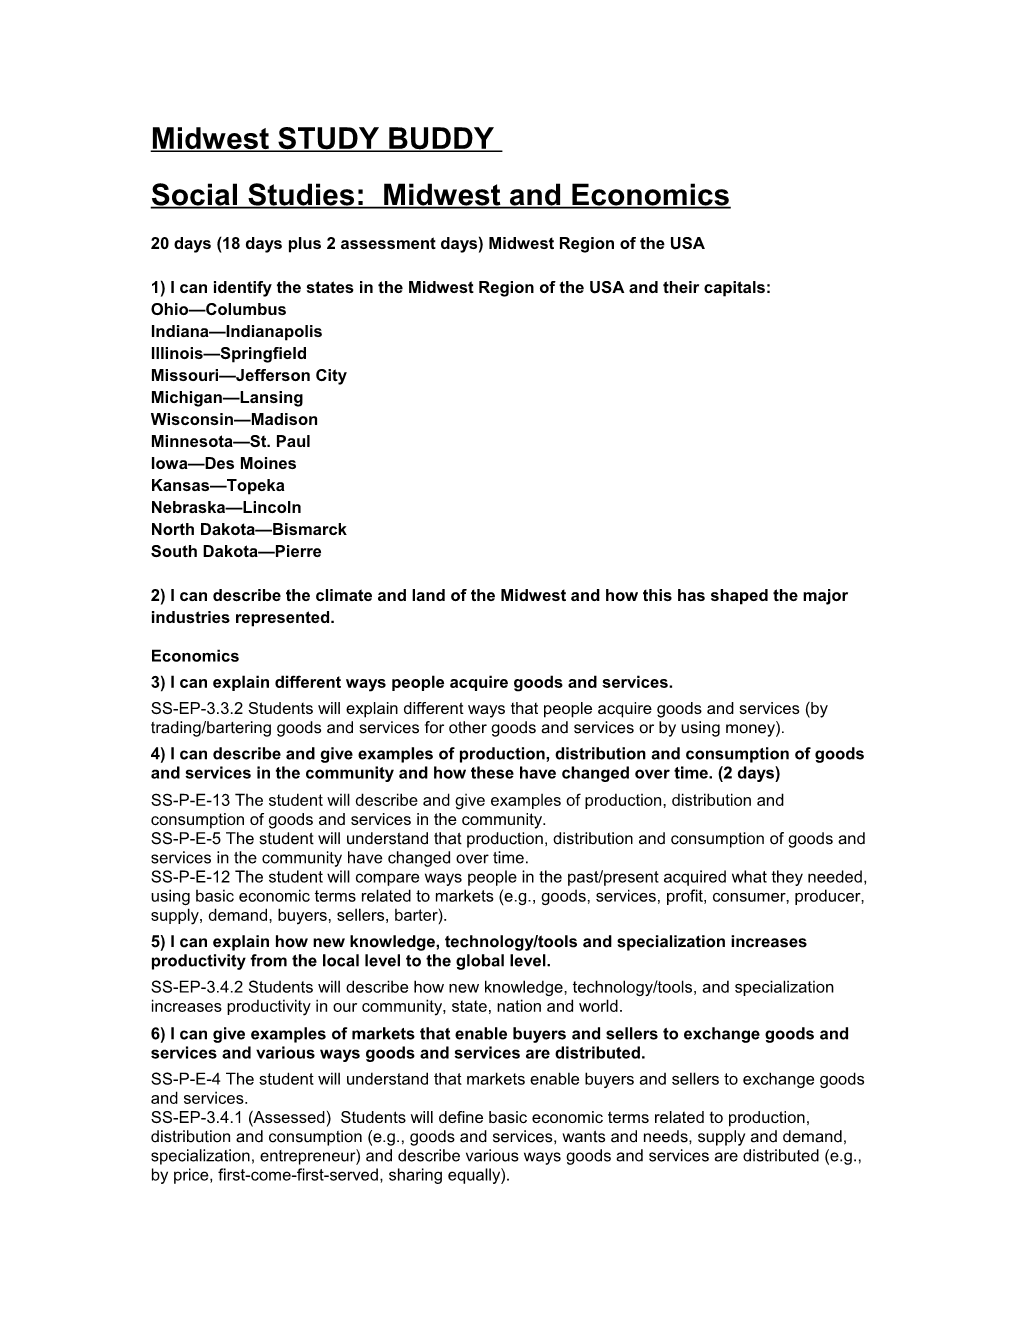 Social Studies: Midwest and Economics